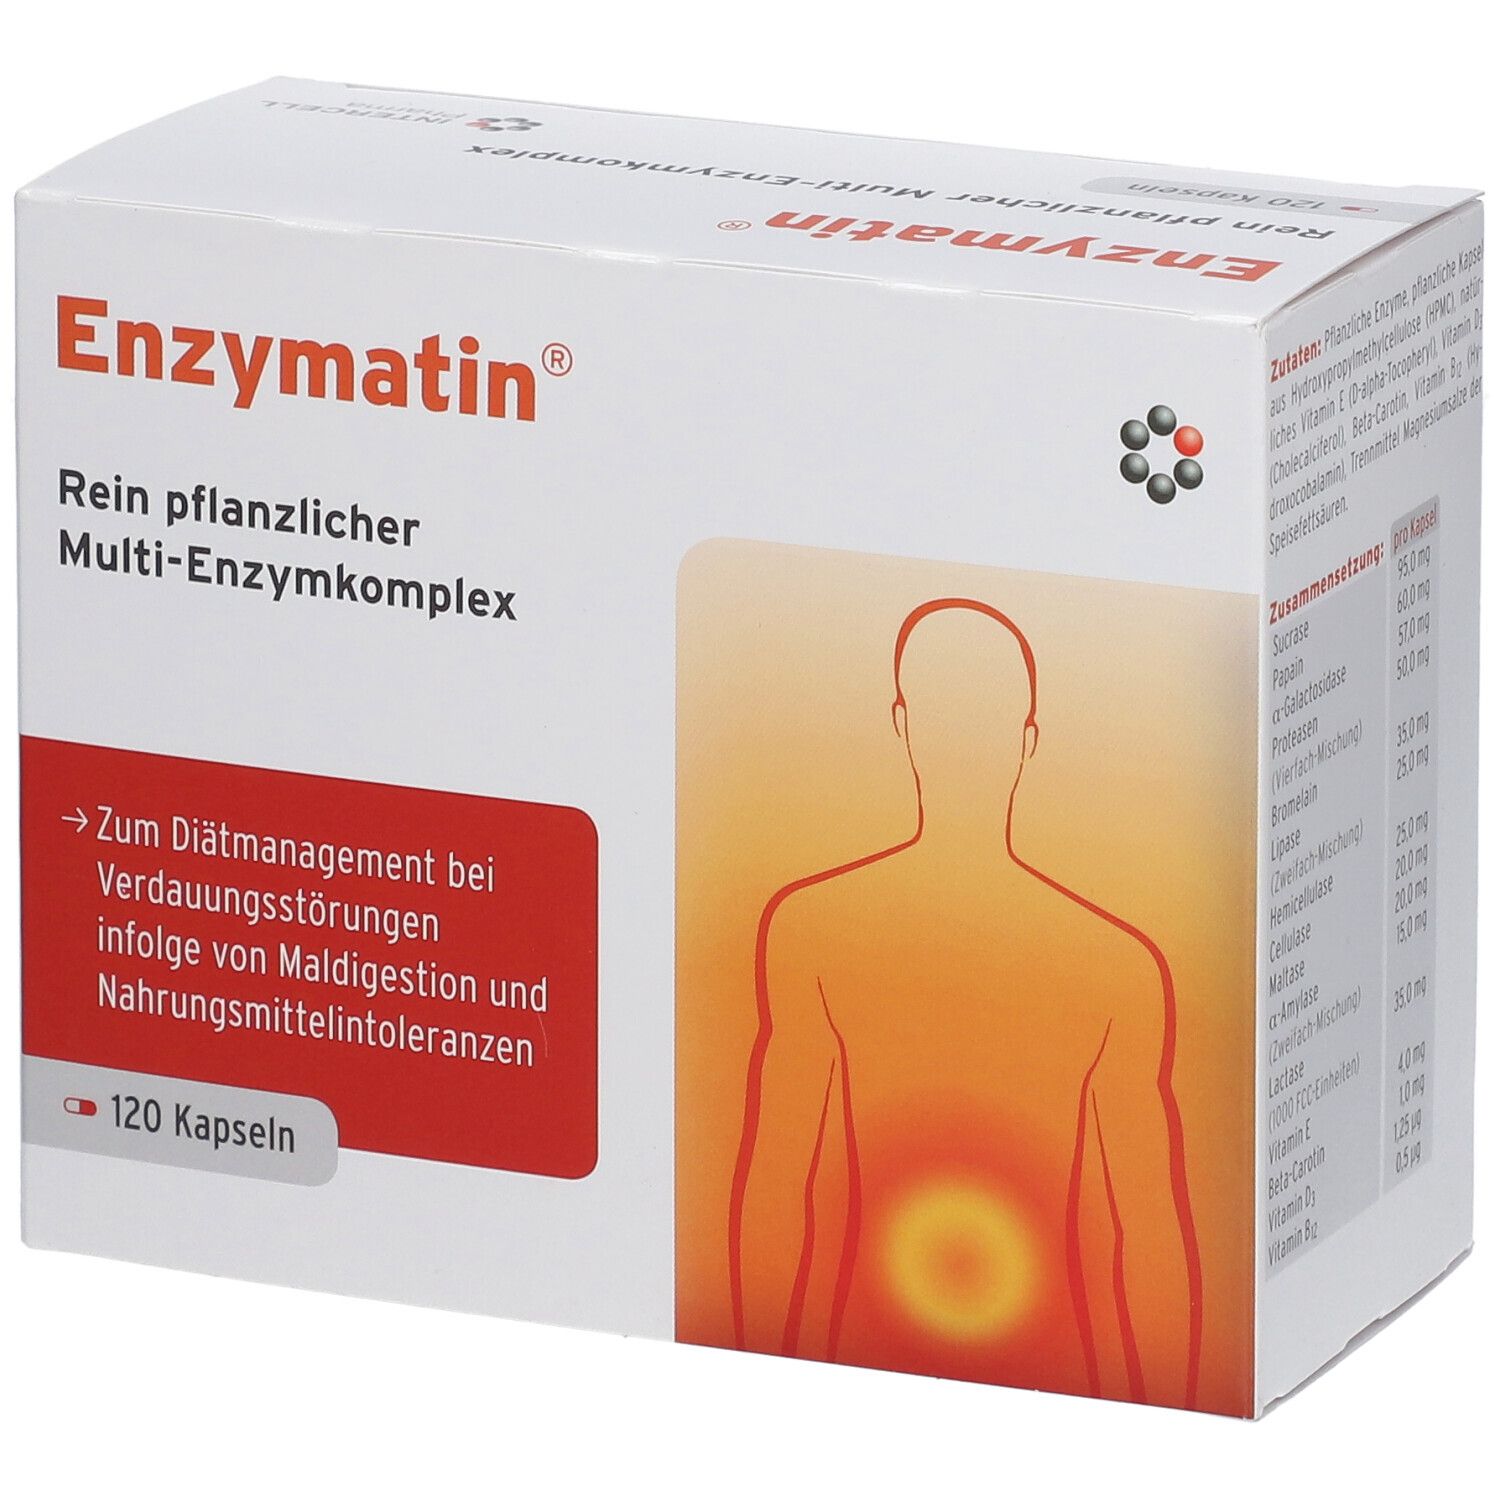 Enzymatin®